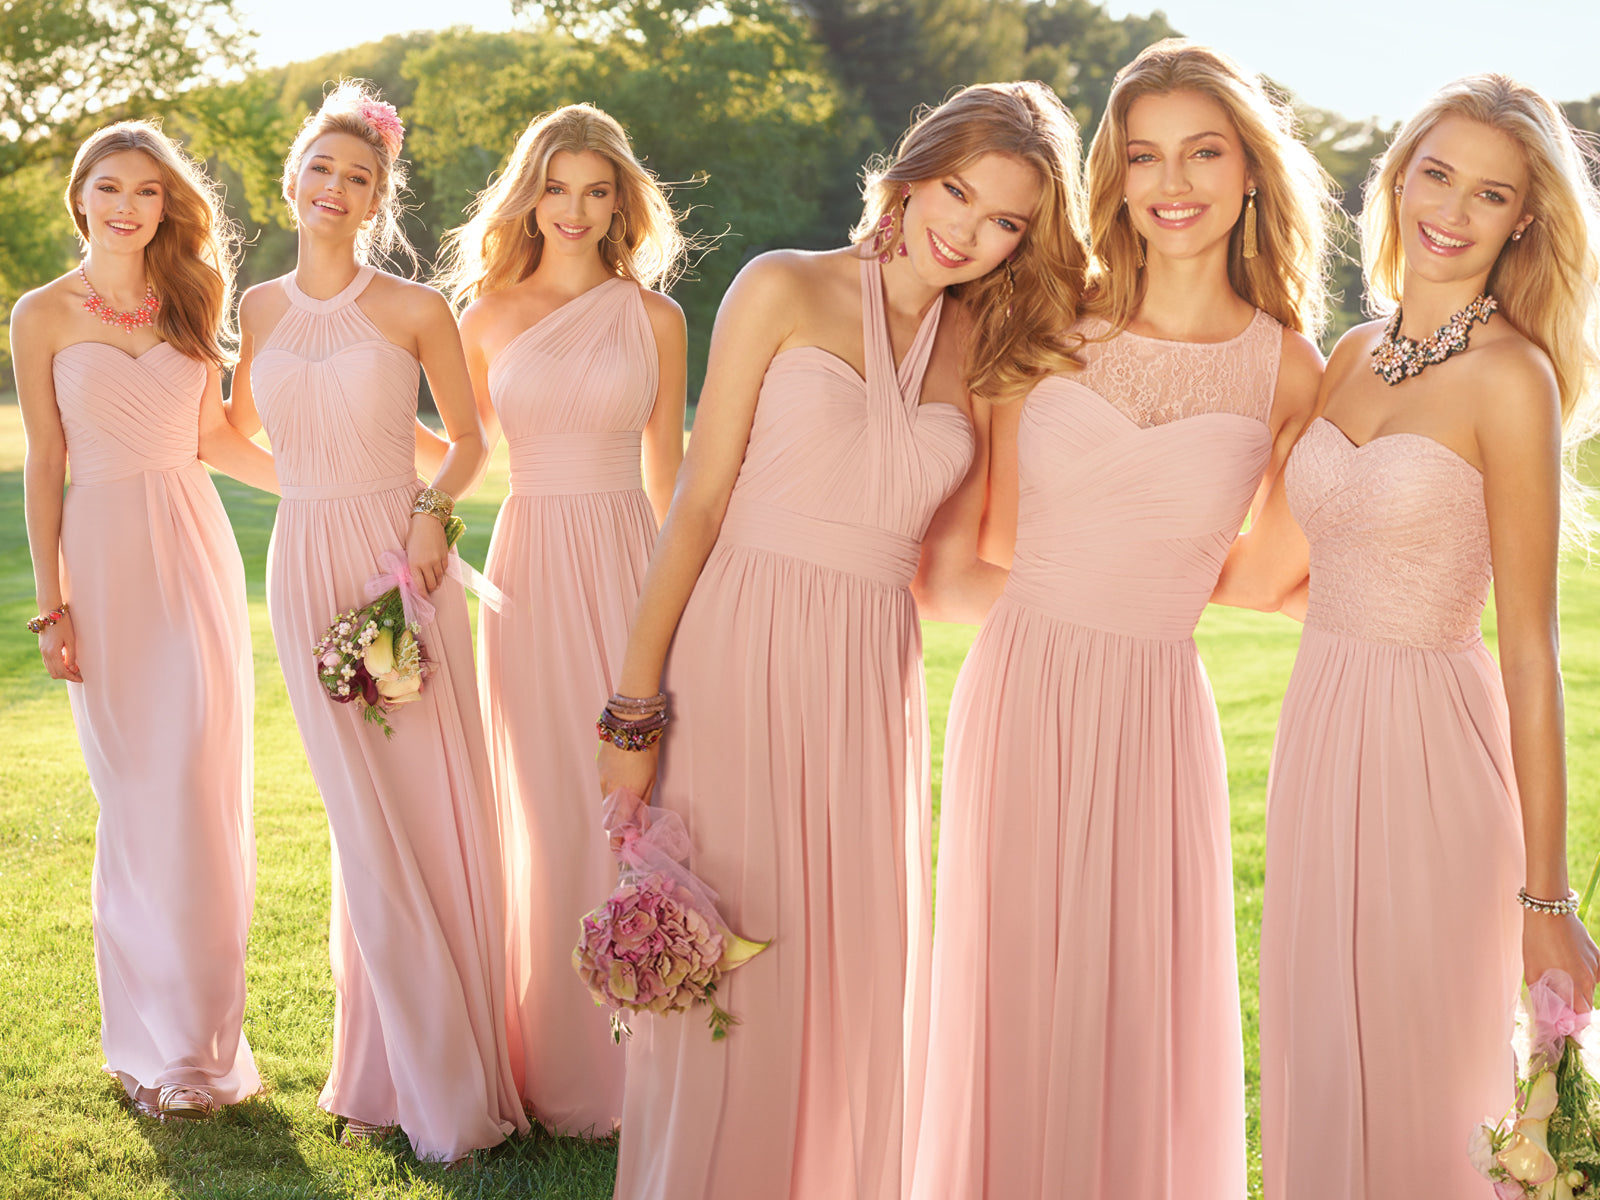 Effortless Bridal Party Style Starts Here | Camille La Vie Dress Shop Blog